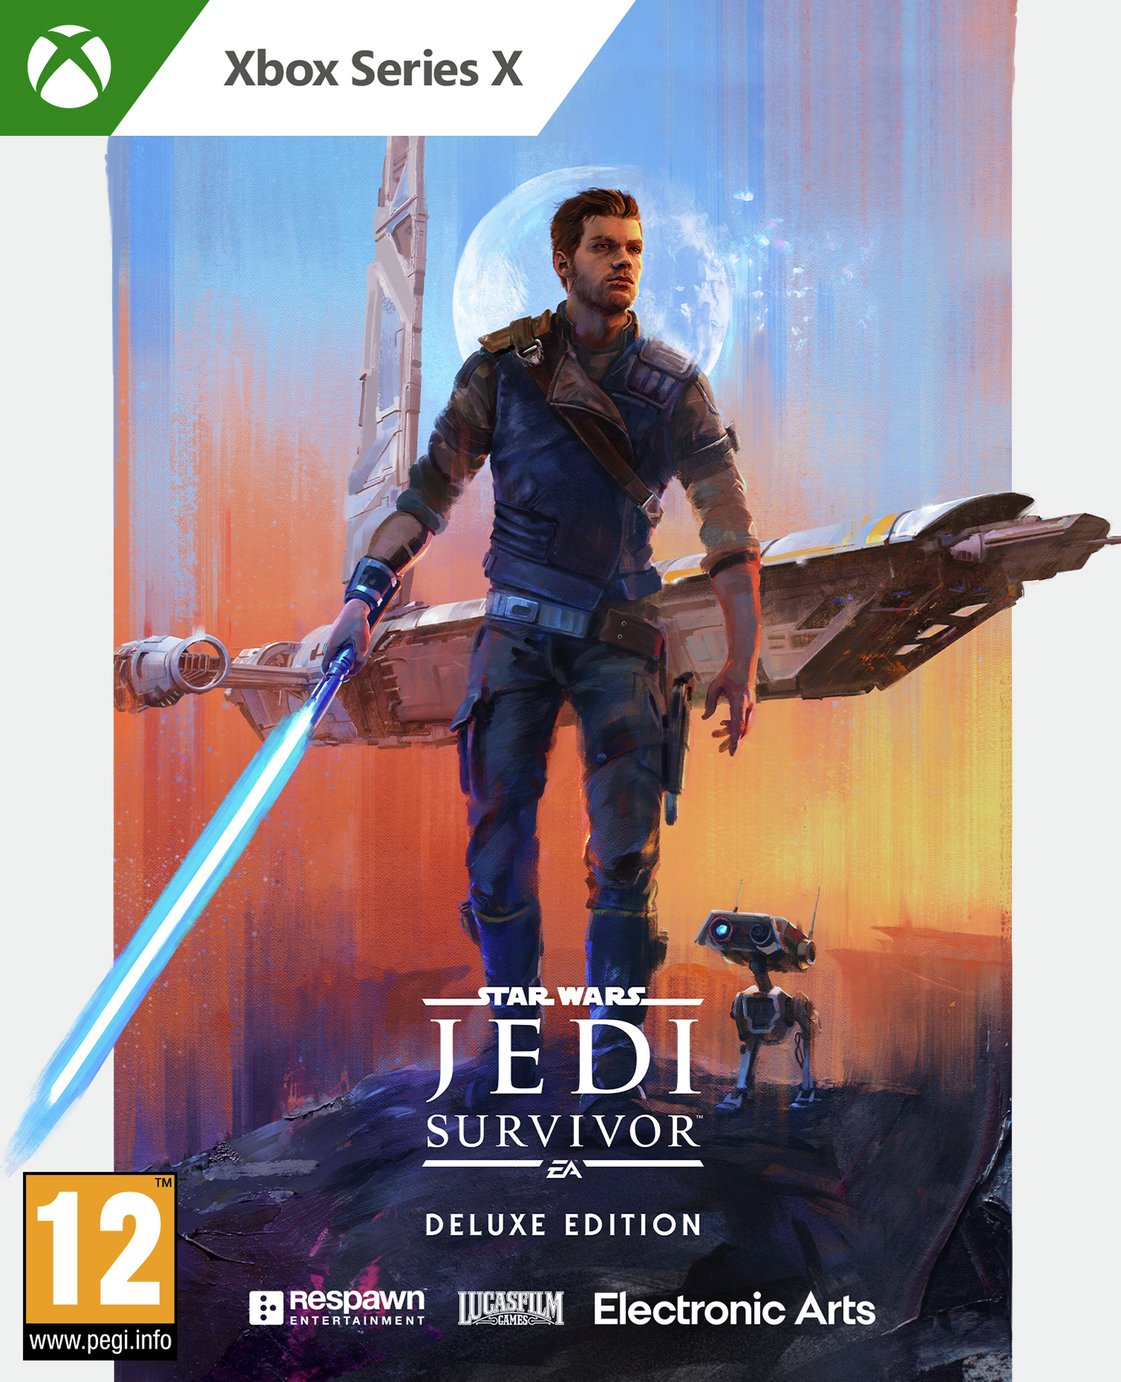 Star Wars Jedi: Survivor Deluxe Edition Xbox Series X Game